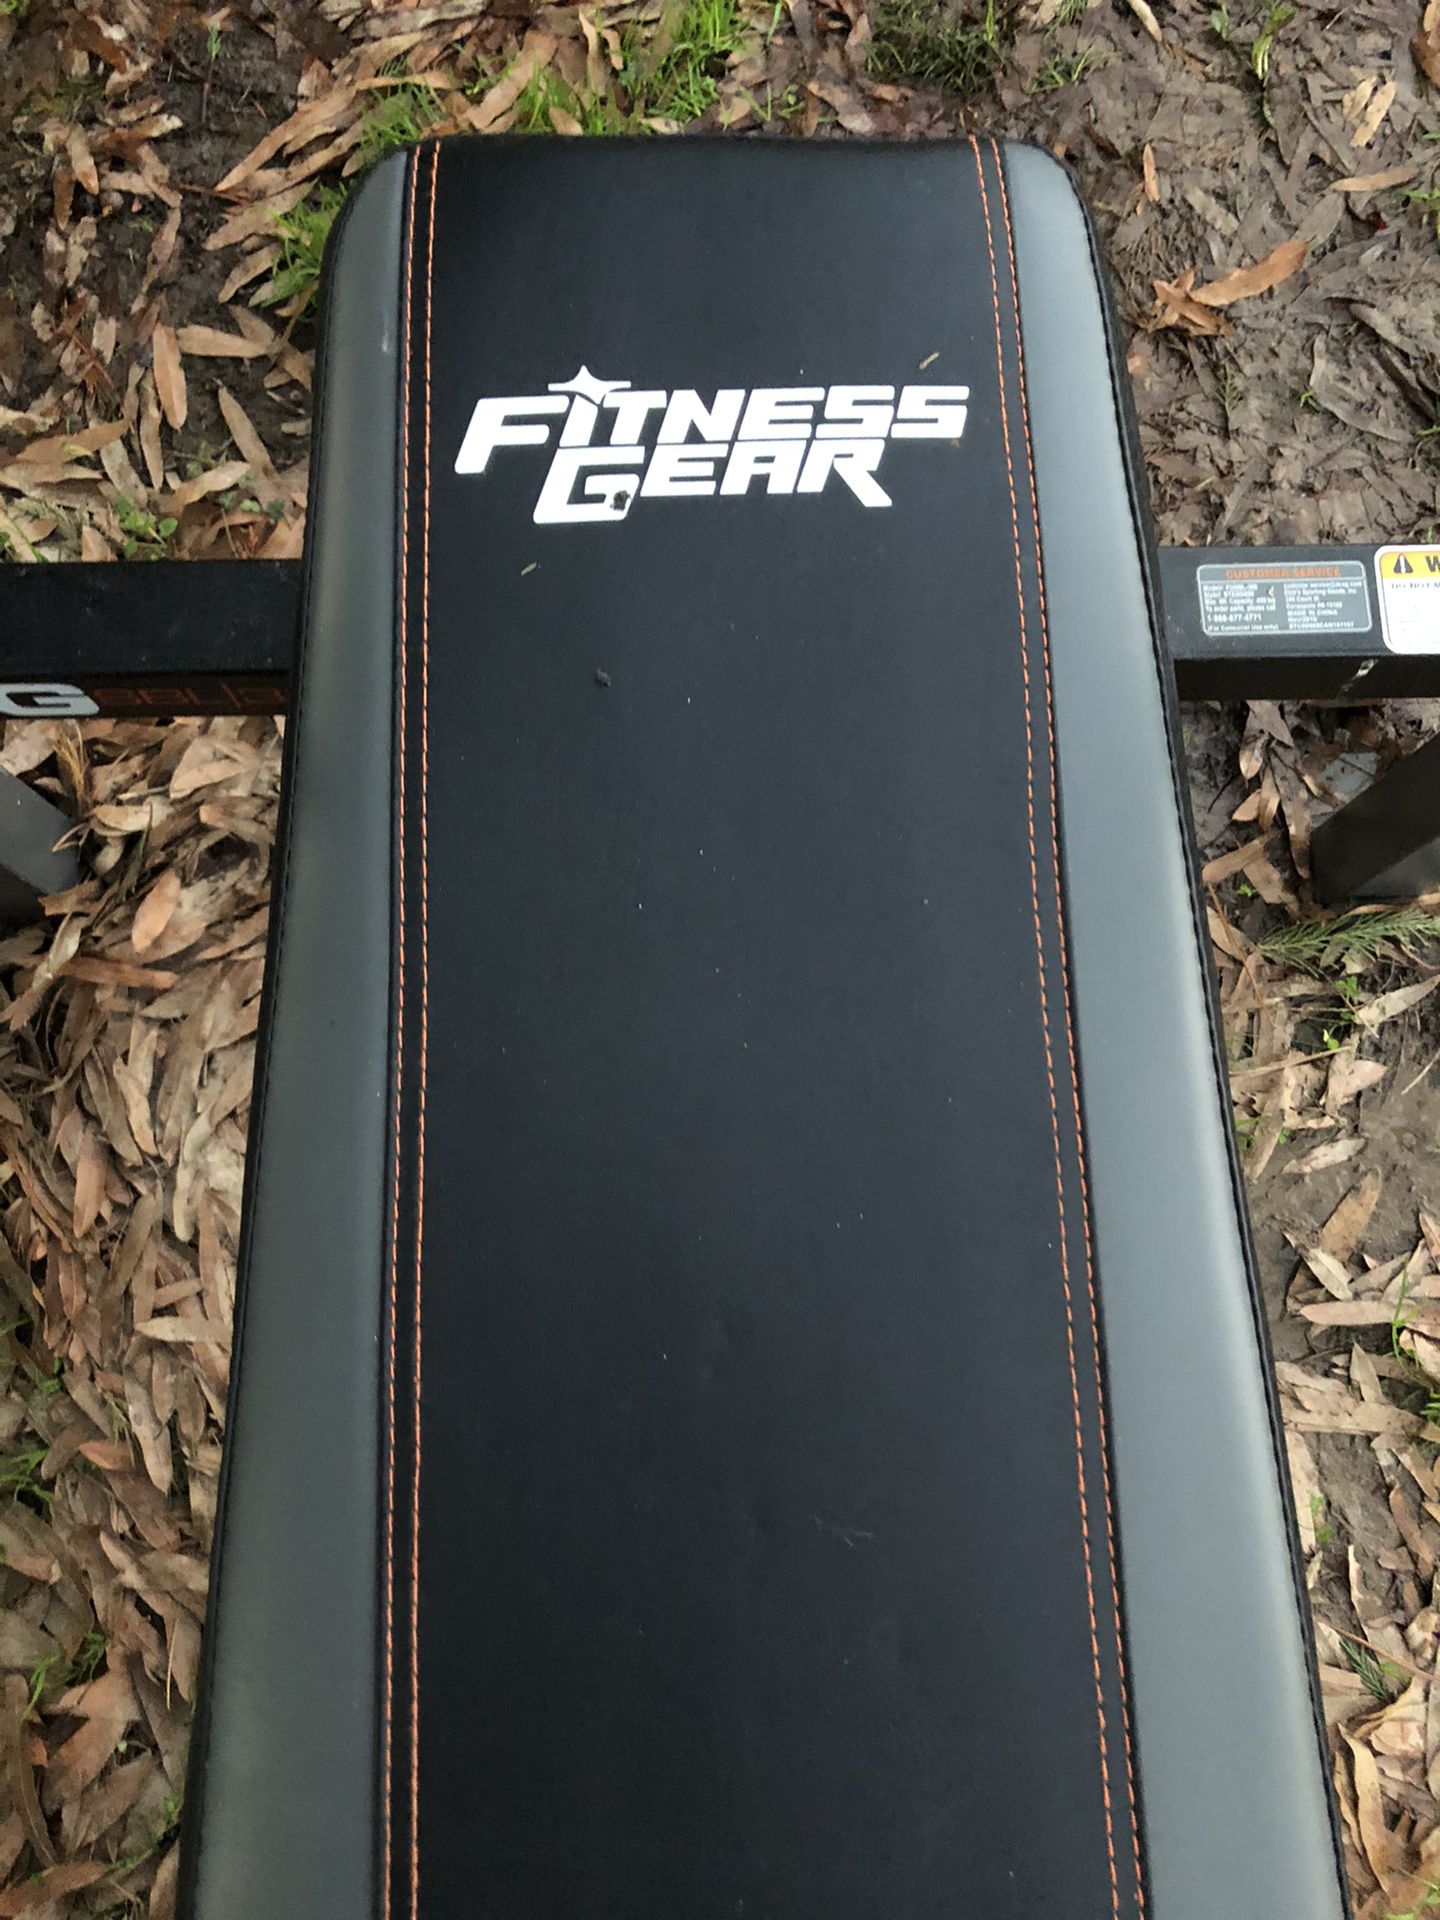 Fitness gear weight bench